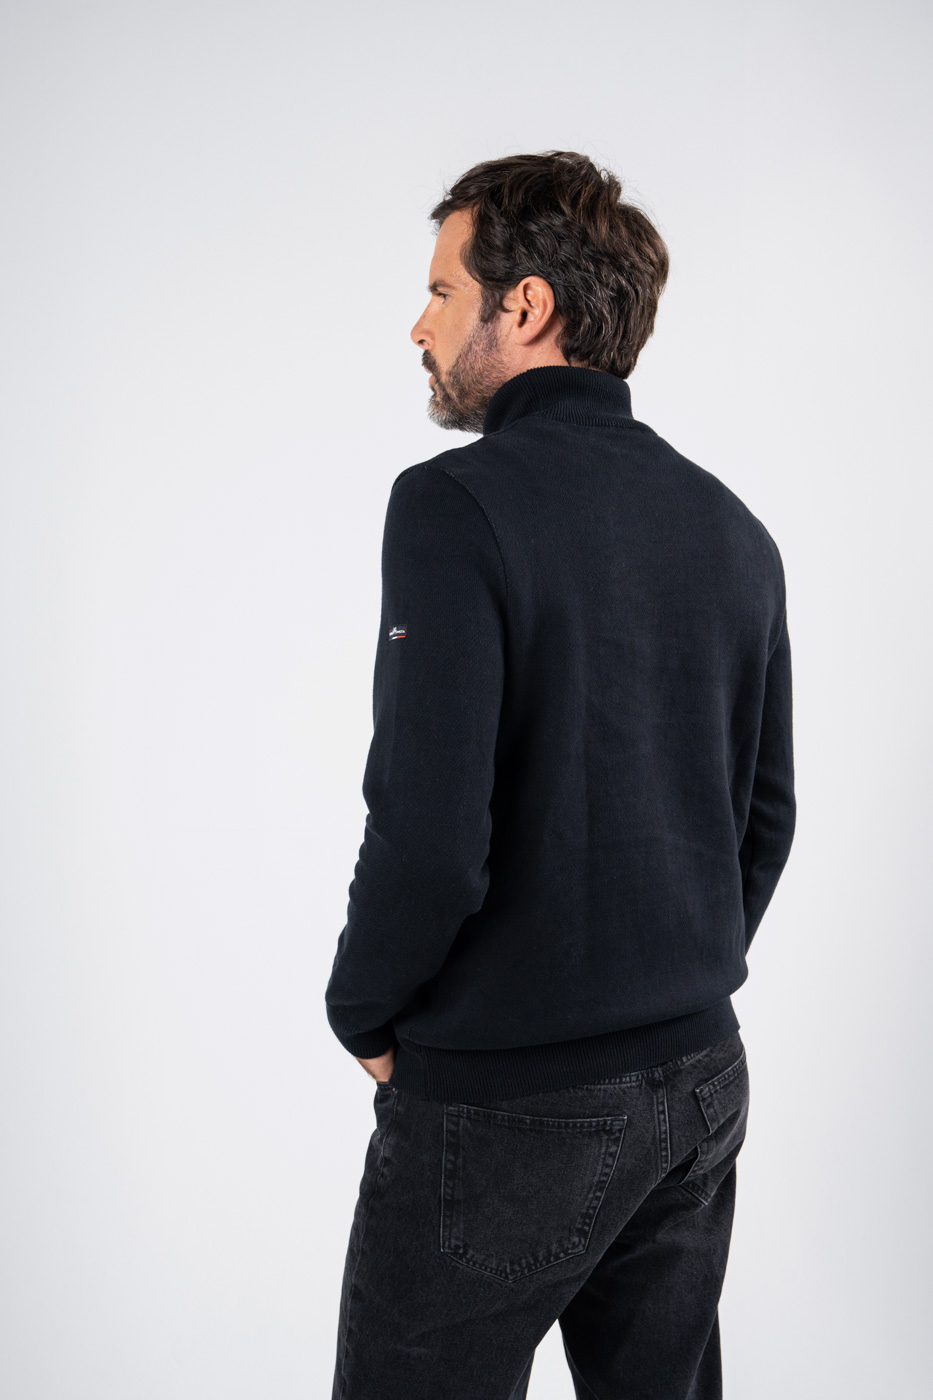 Man wearing Semper Invicta anti-laceration turtleneck sweater